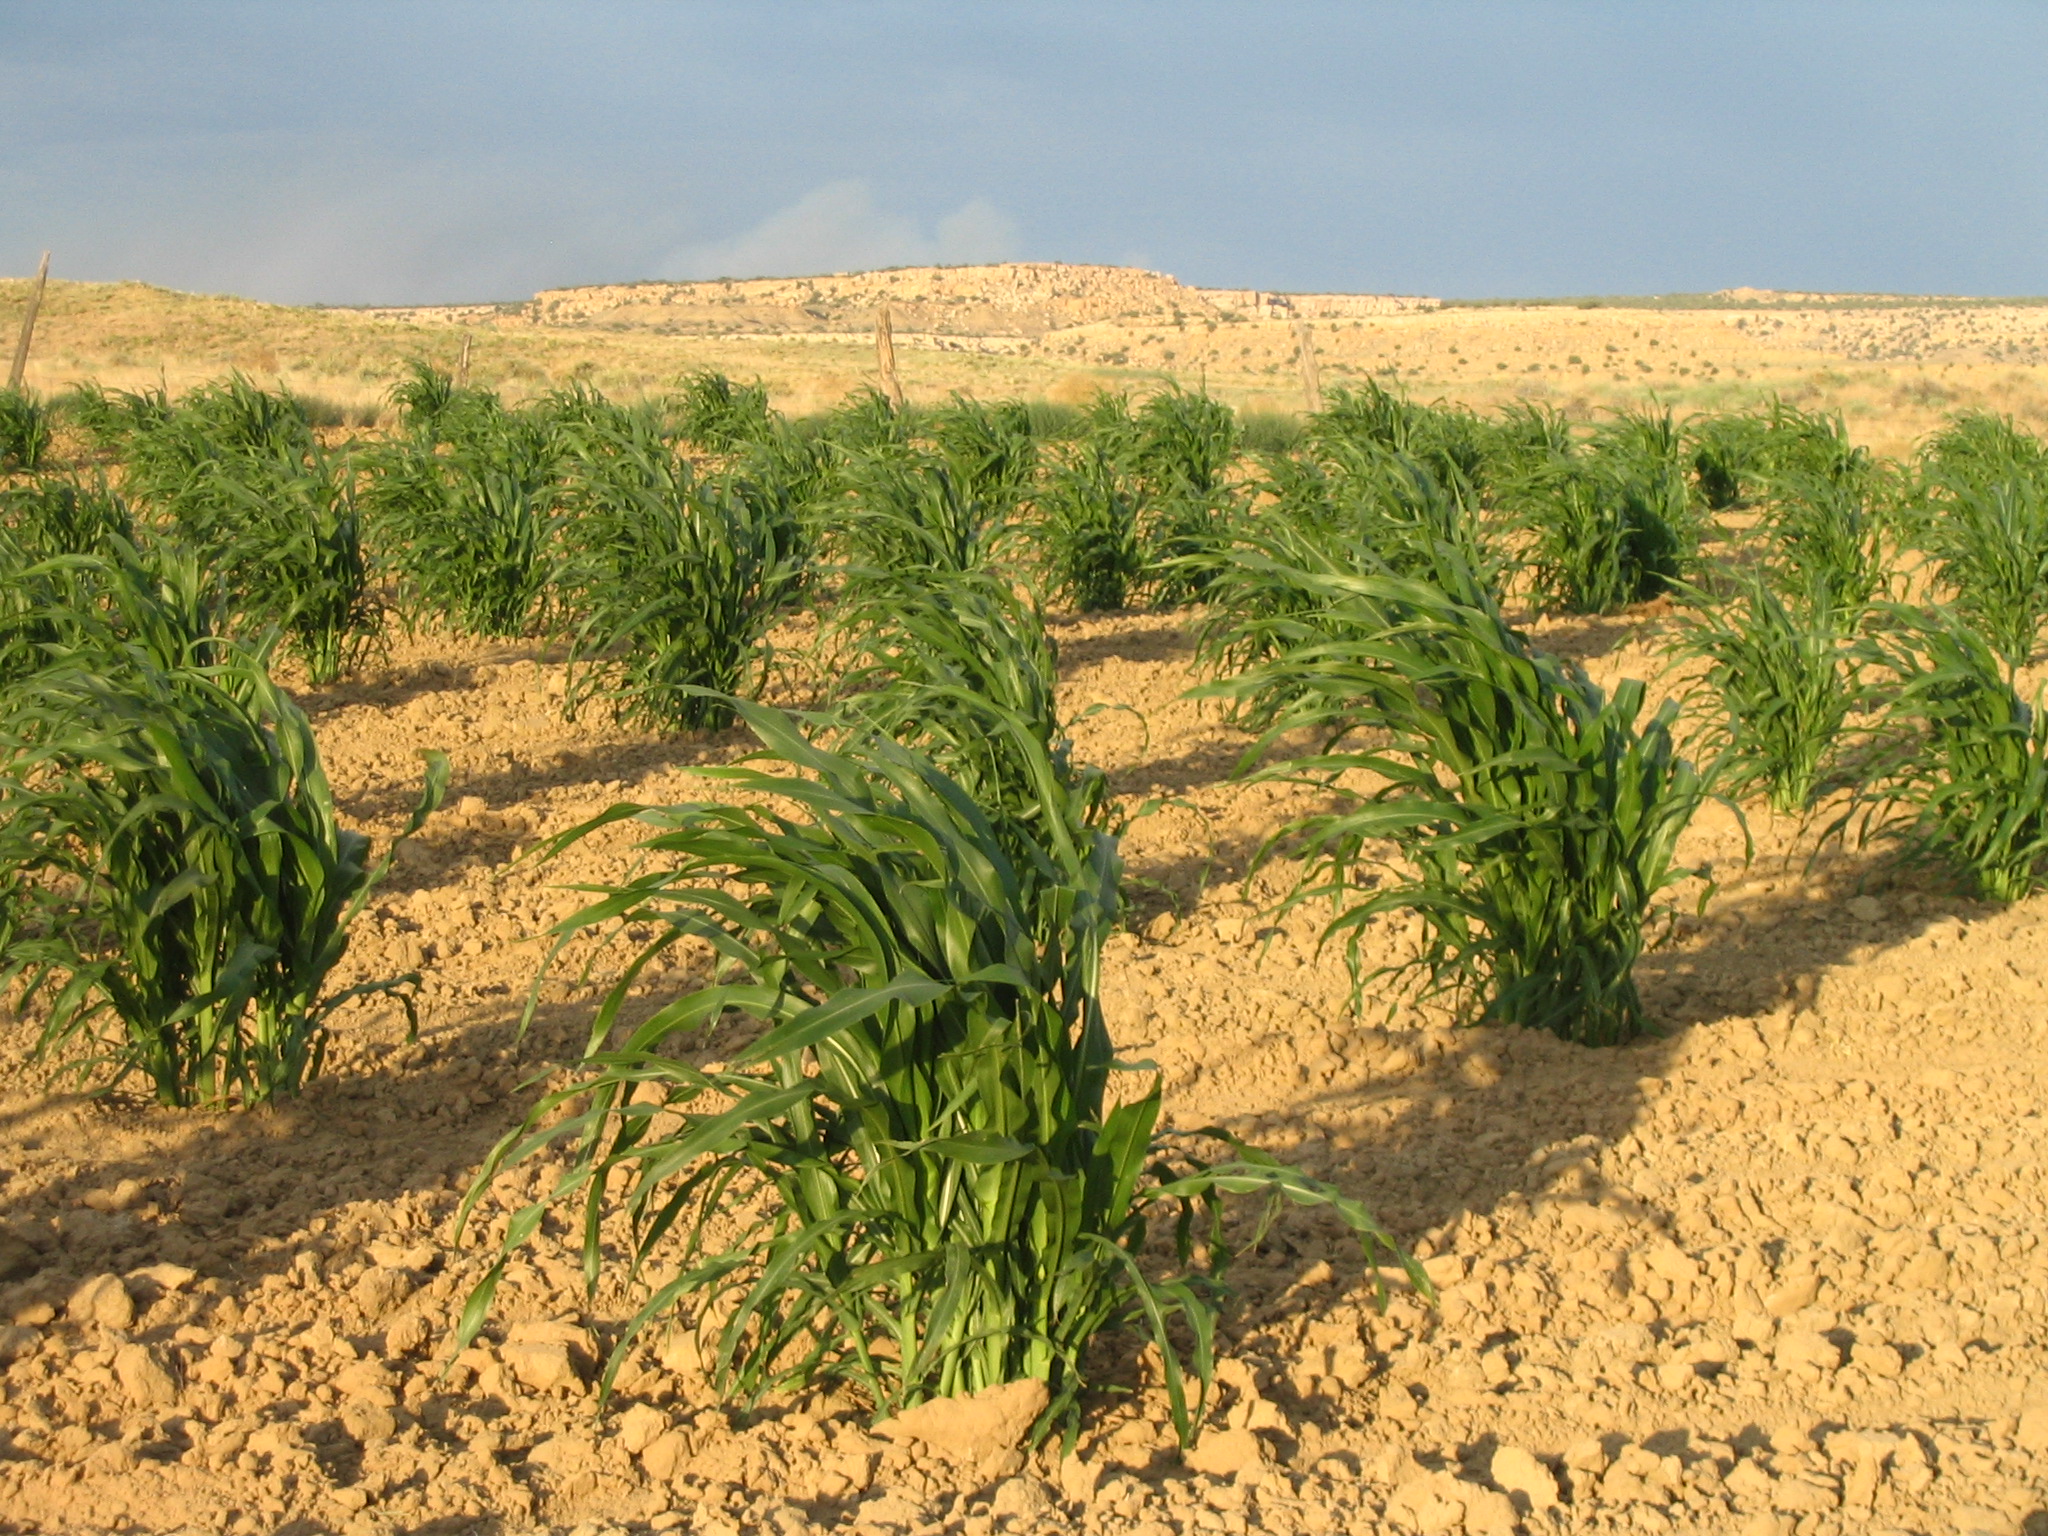 Can Dryland Farming Help Growers Endure Increasing Heatwaves and Drought? - Modern Farmer